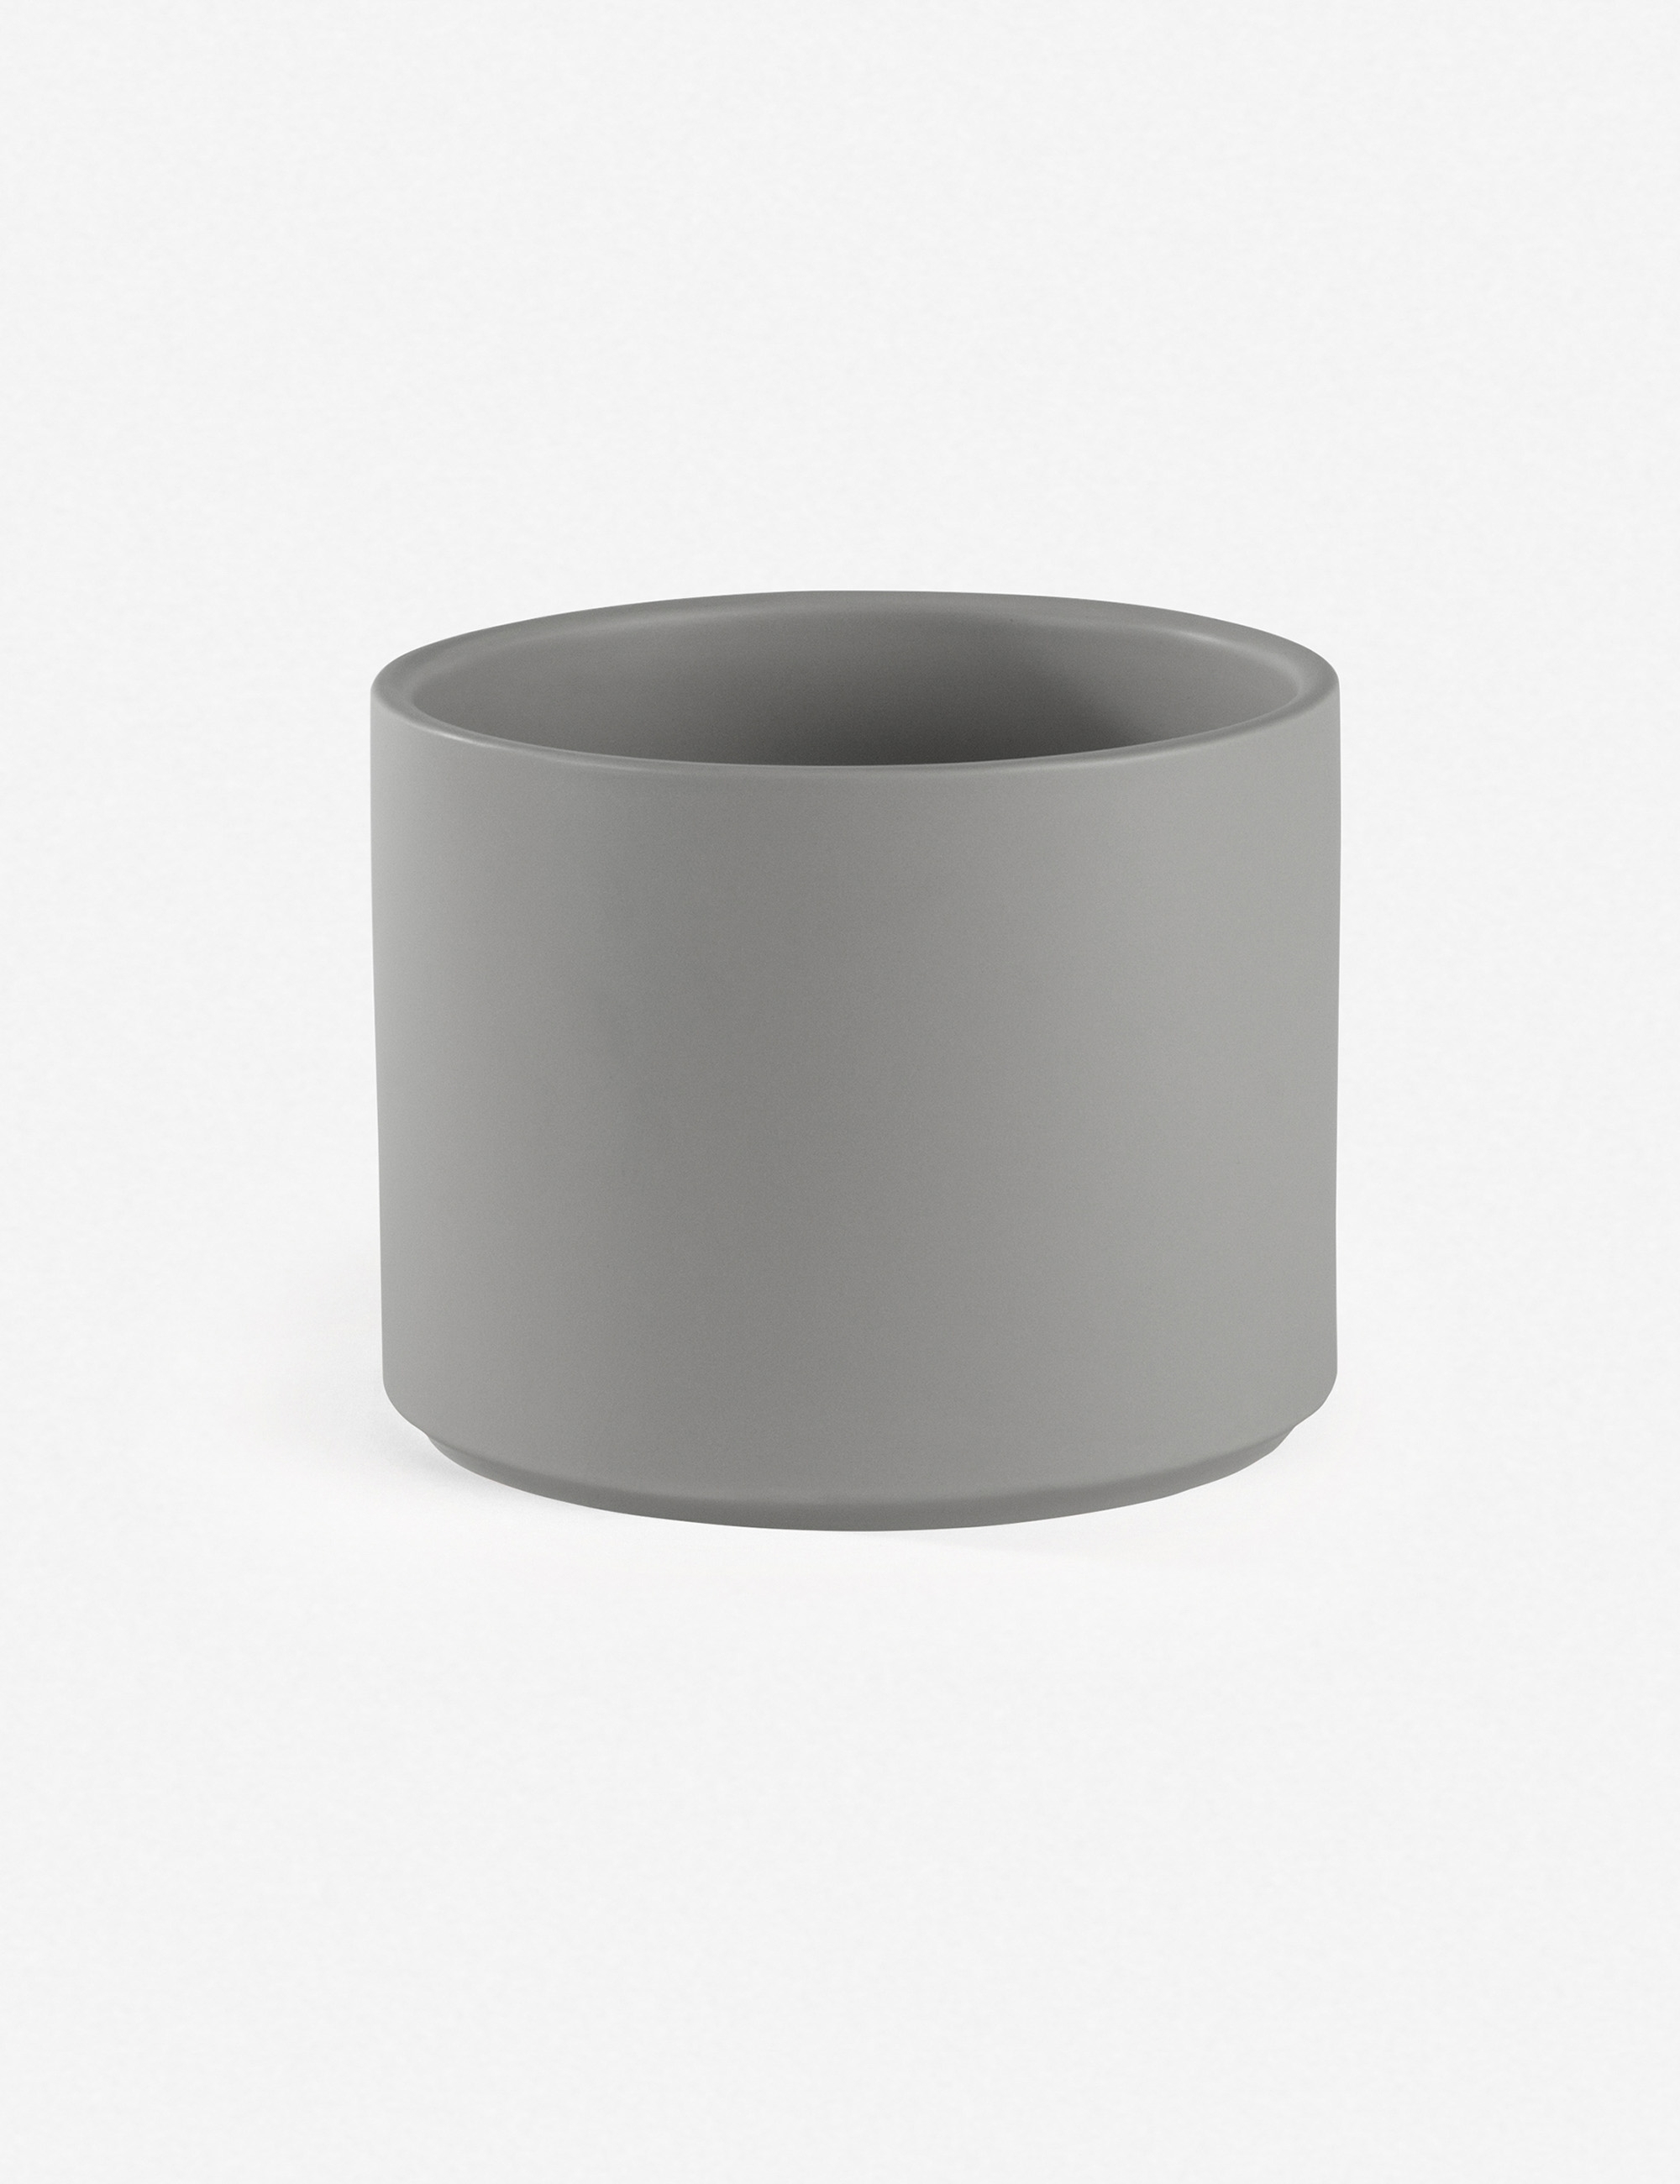 Ceramic Planter Pot by LBE Design - Image 1